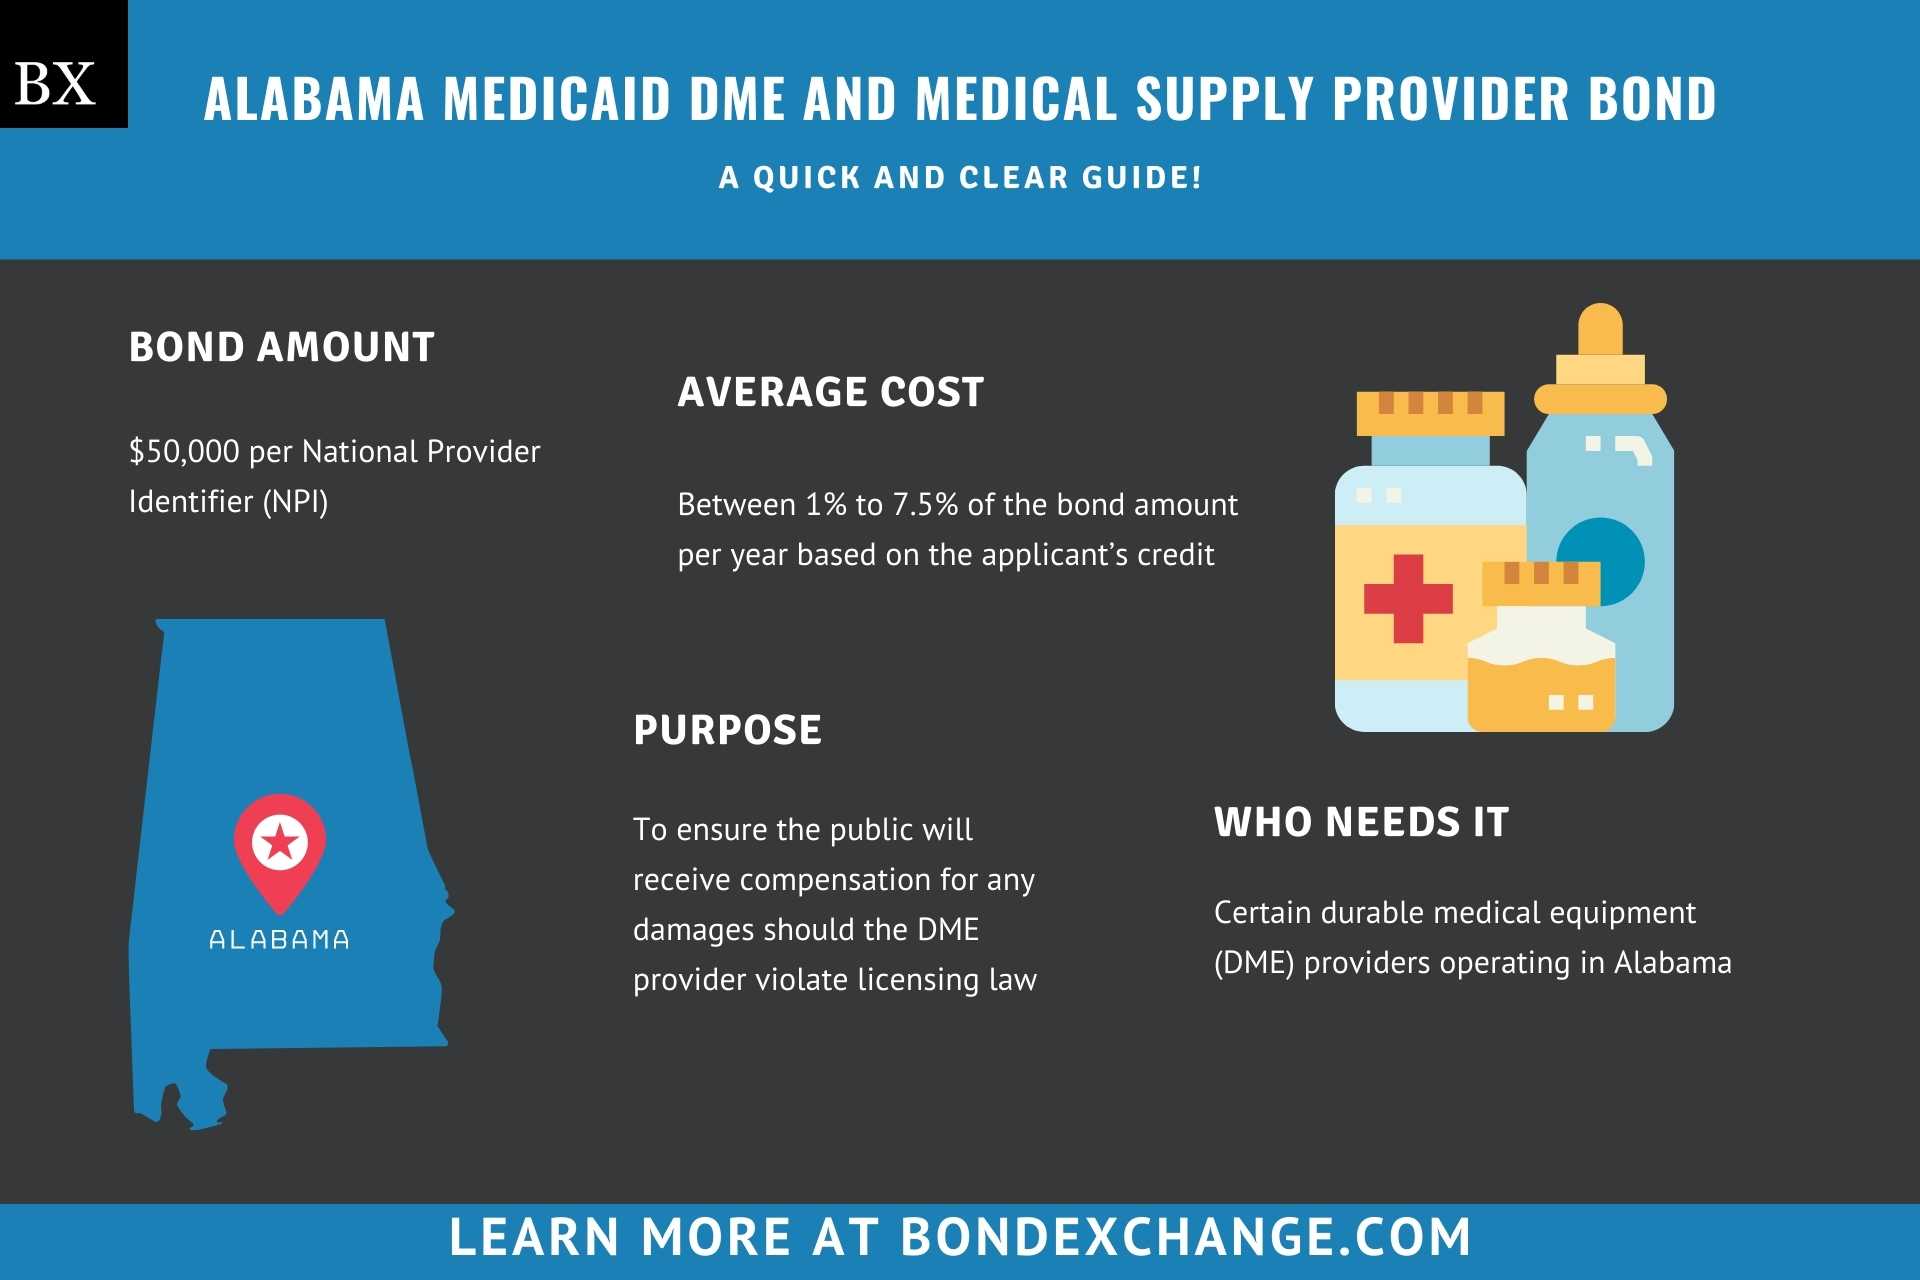 Alabama Medicaid DME and Medical Supply Provider Bond